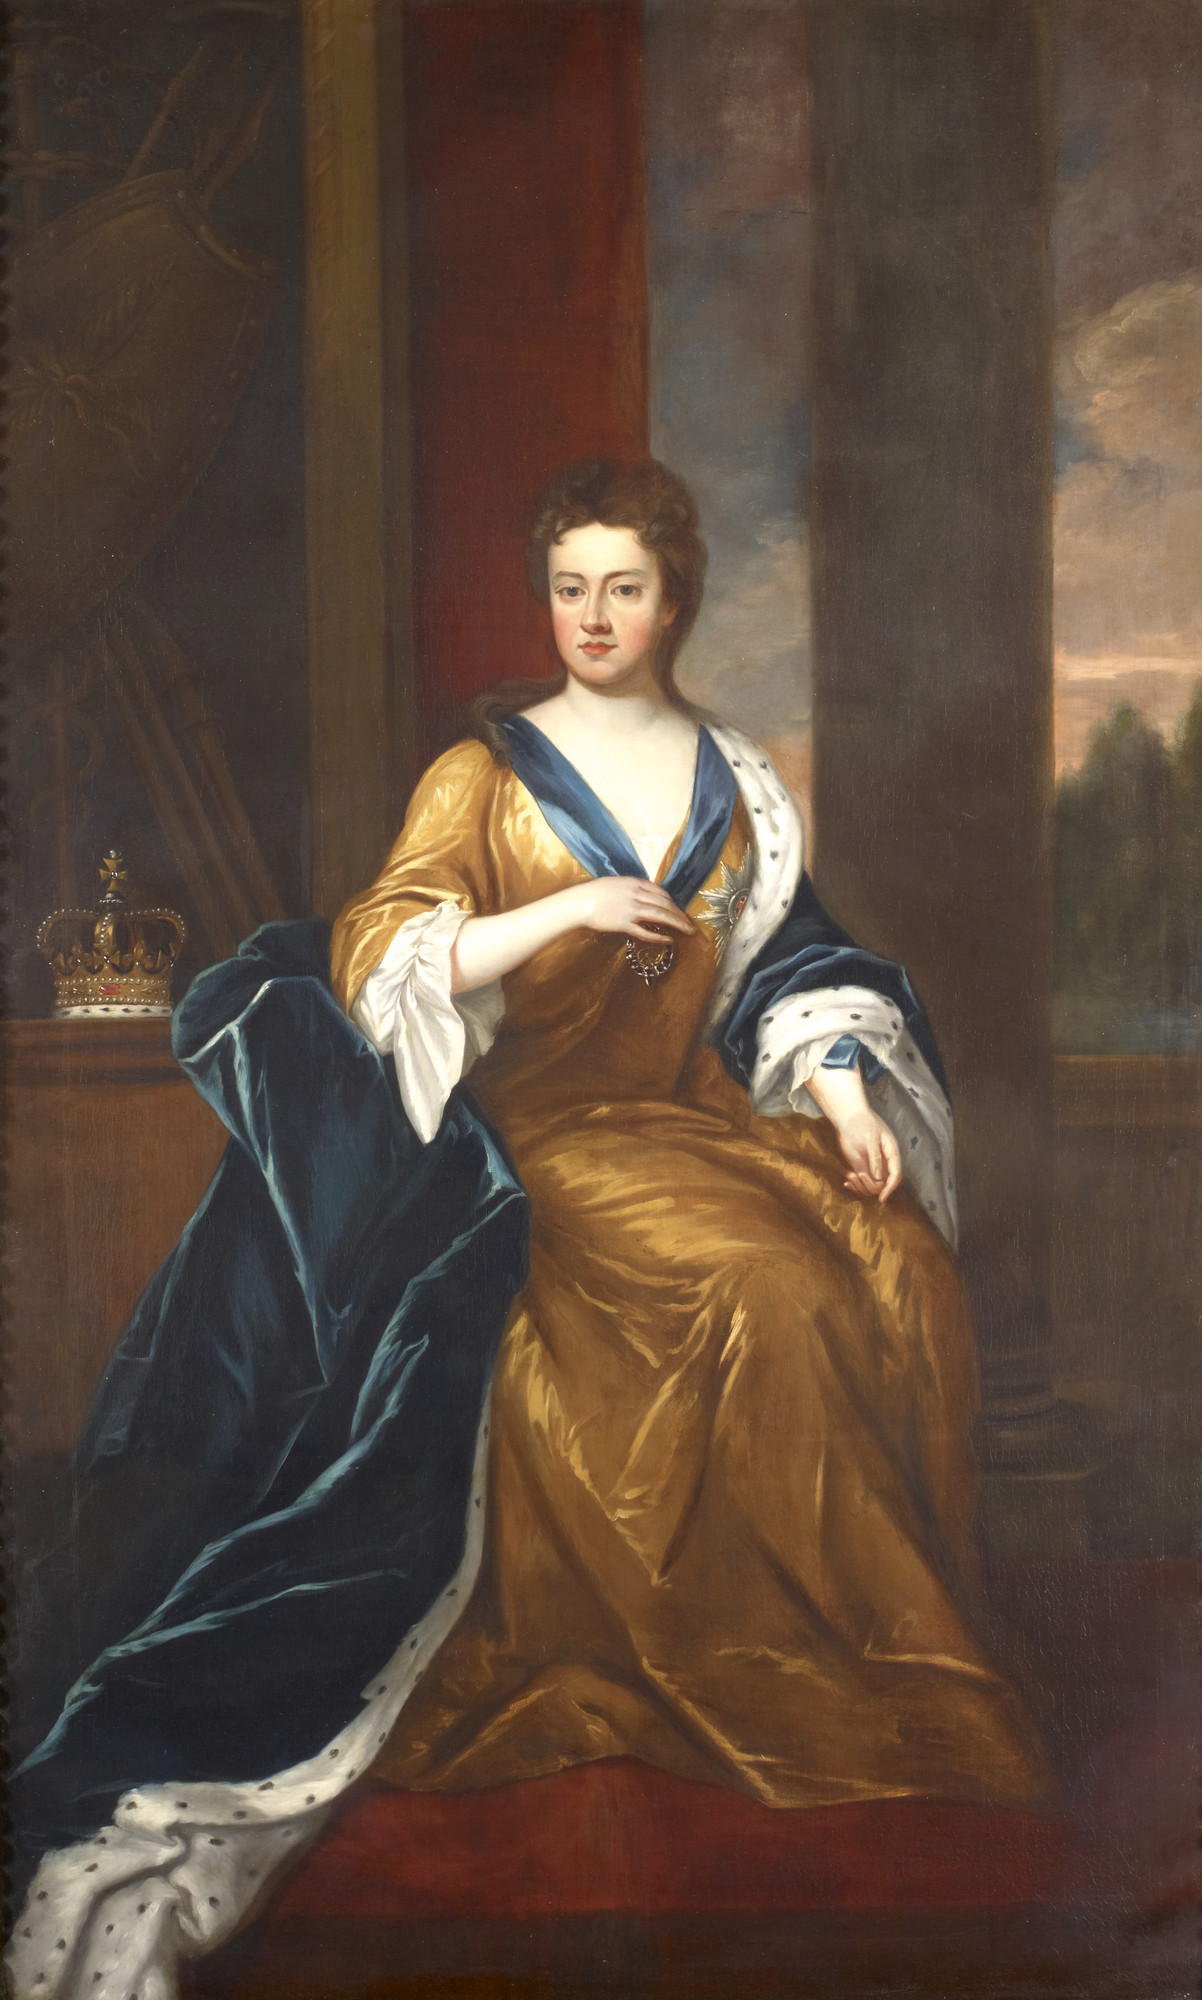 Portrait of Queen Anne